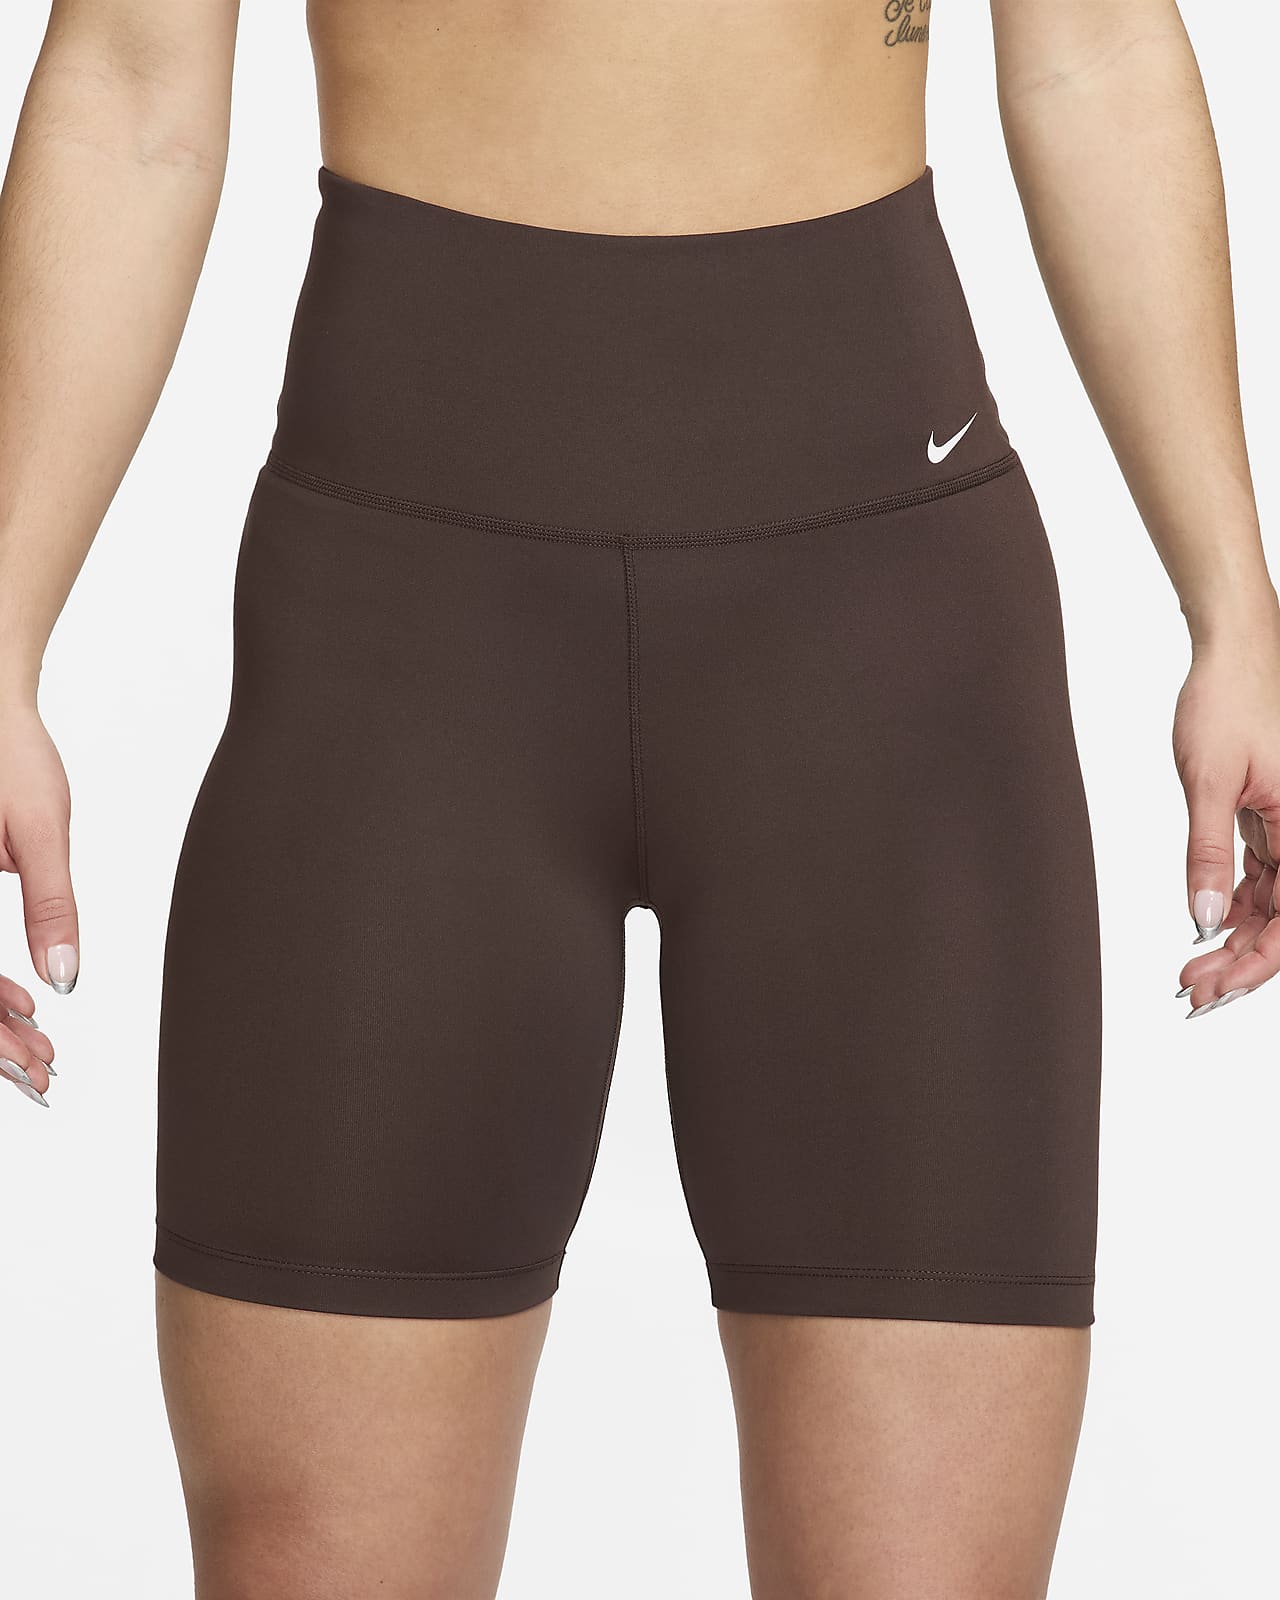 Nike high rise 7 inch legging shorts